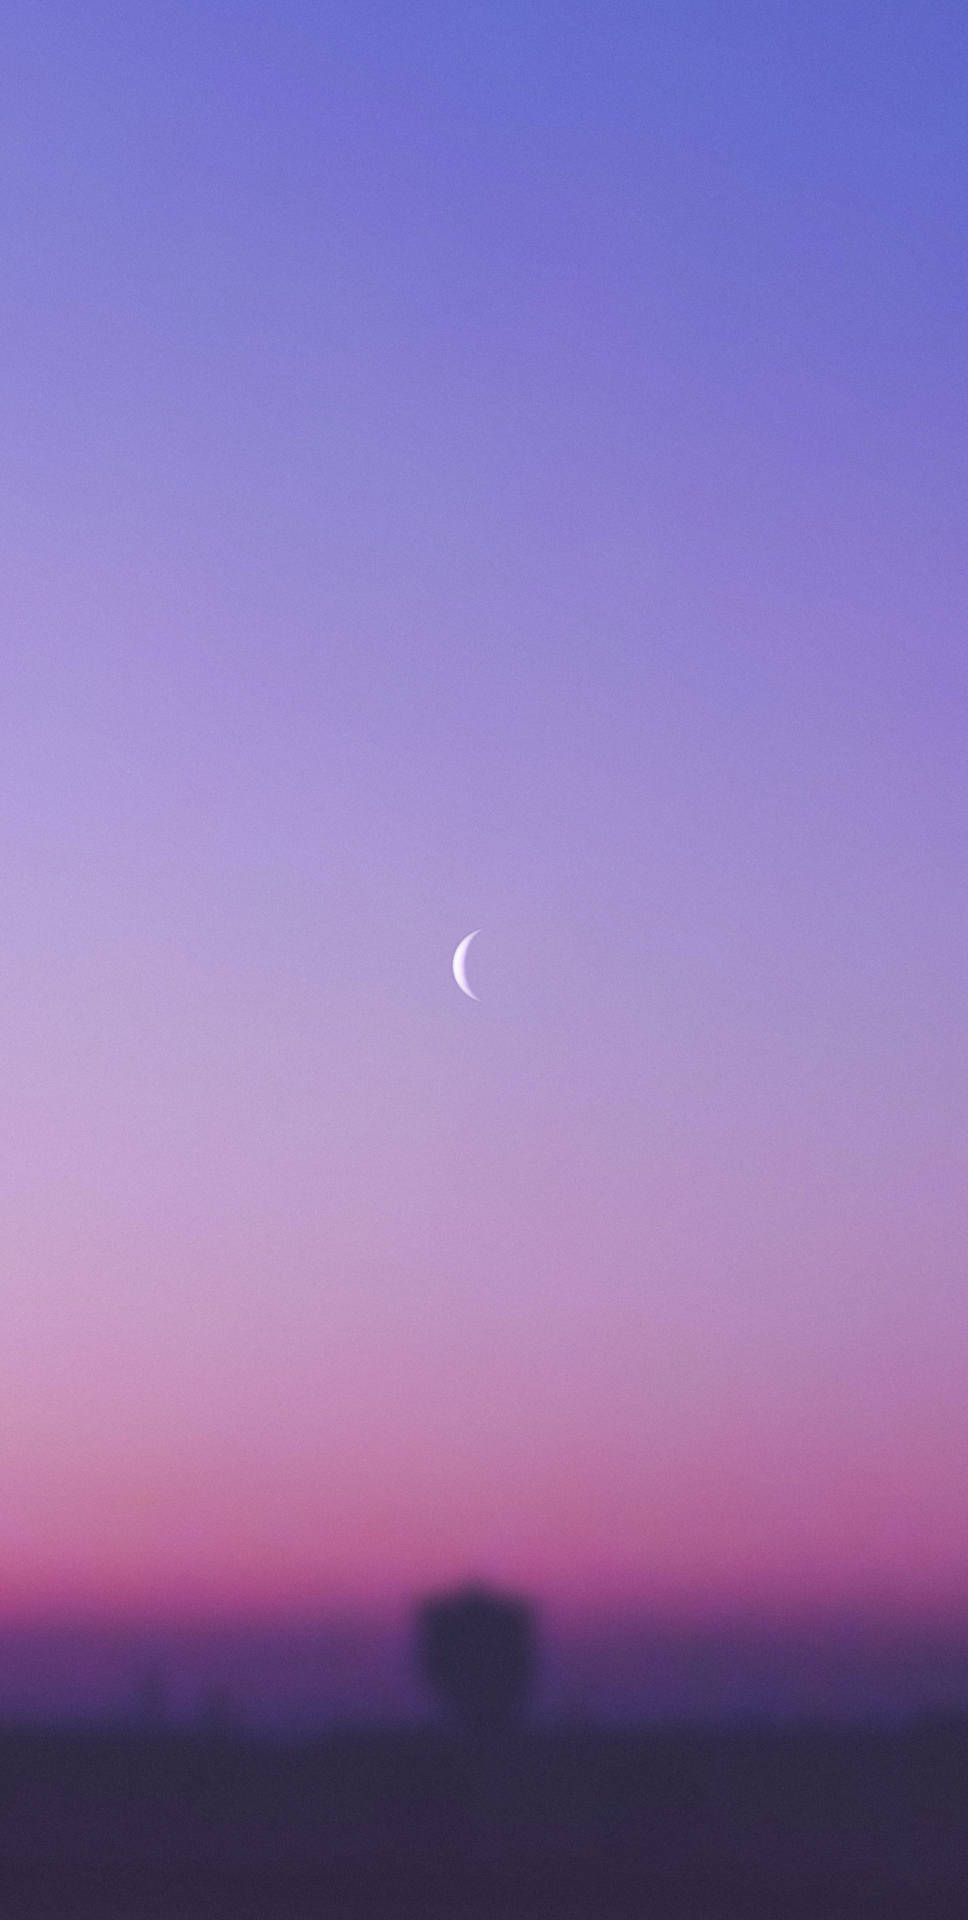 Purple Sky With Crescent Moon Wallpaper